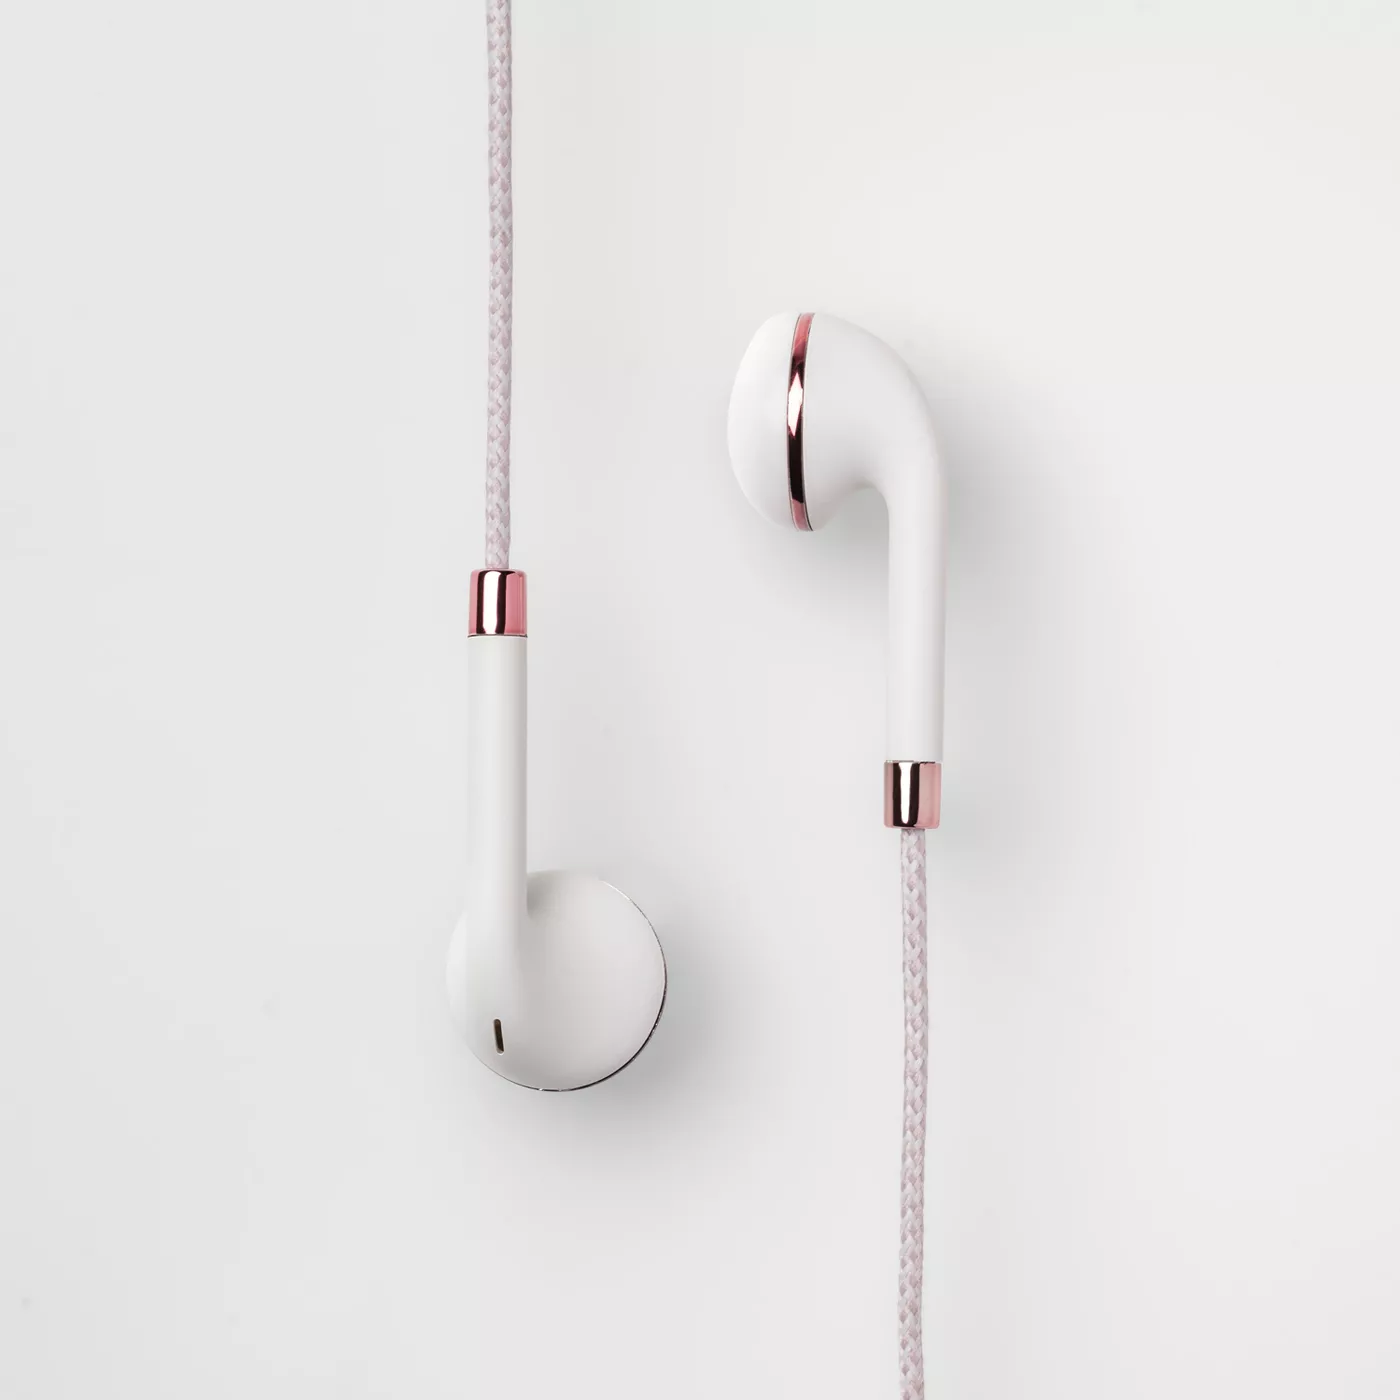 heydayâ¢ Wired In-Ear Braided Cable Earbuds - image 2 of 3